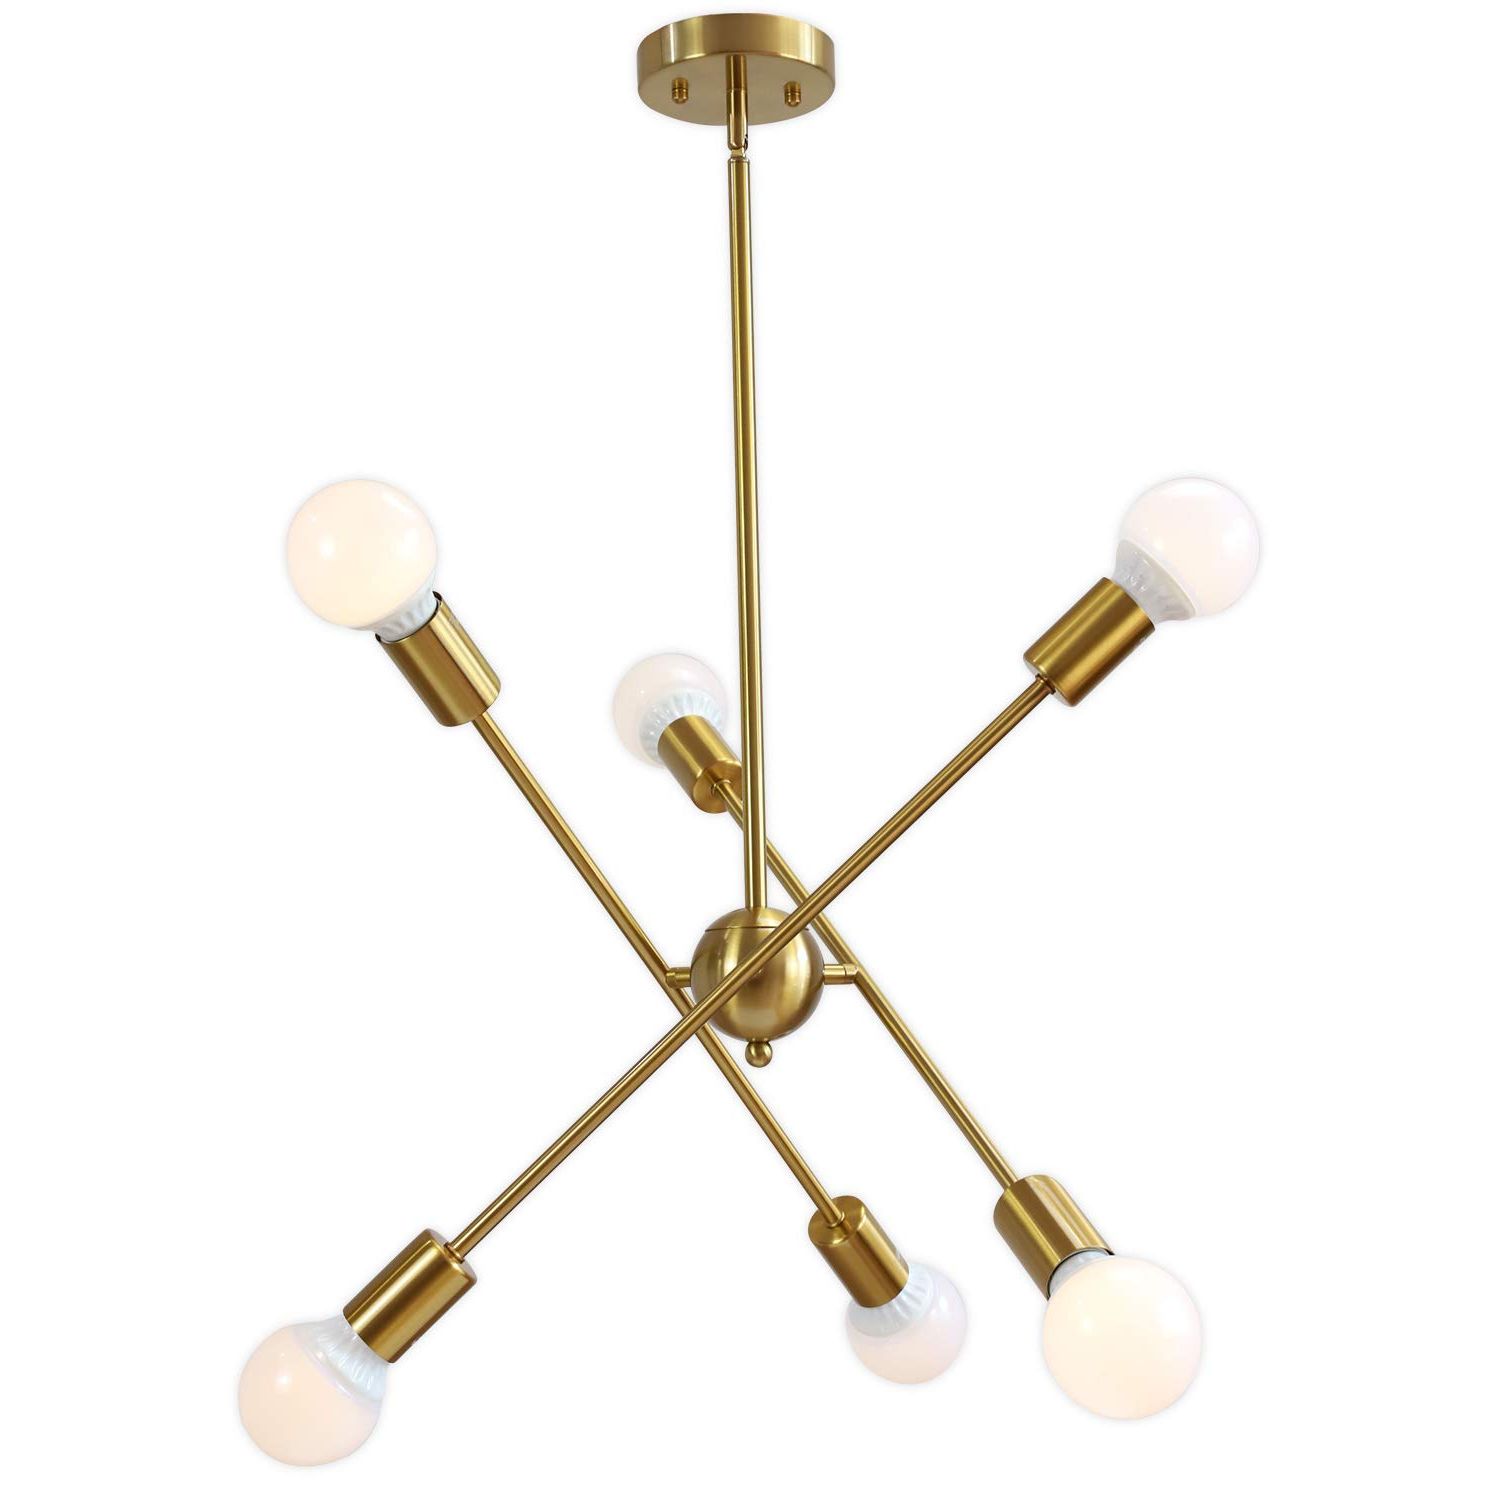 Tudolight Sputnik Chandelier Brushed Brass 6 Lights Modern Pendant Lighting  Gold Mid Century Ceiling Light Fixture Ul Listed For Kitchen Dining Room With Current Bautista 6 Light Sputnik Chandeliers (View 18 of 25)